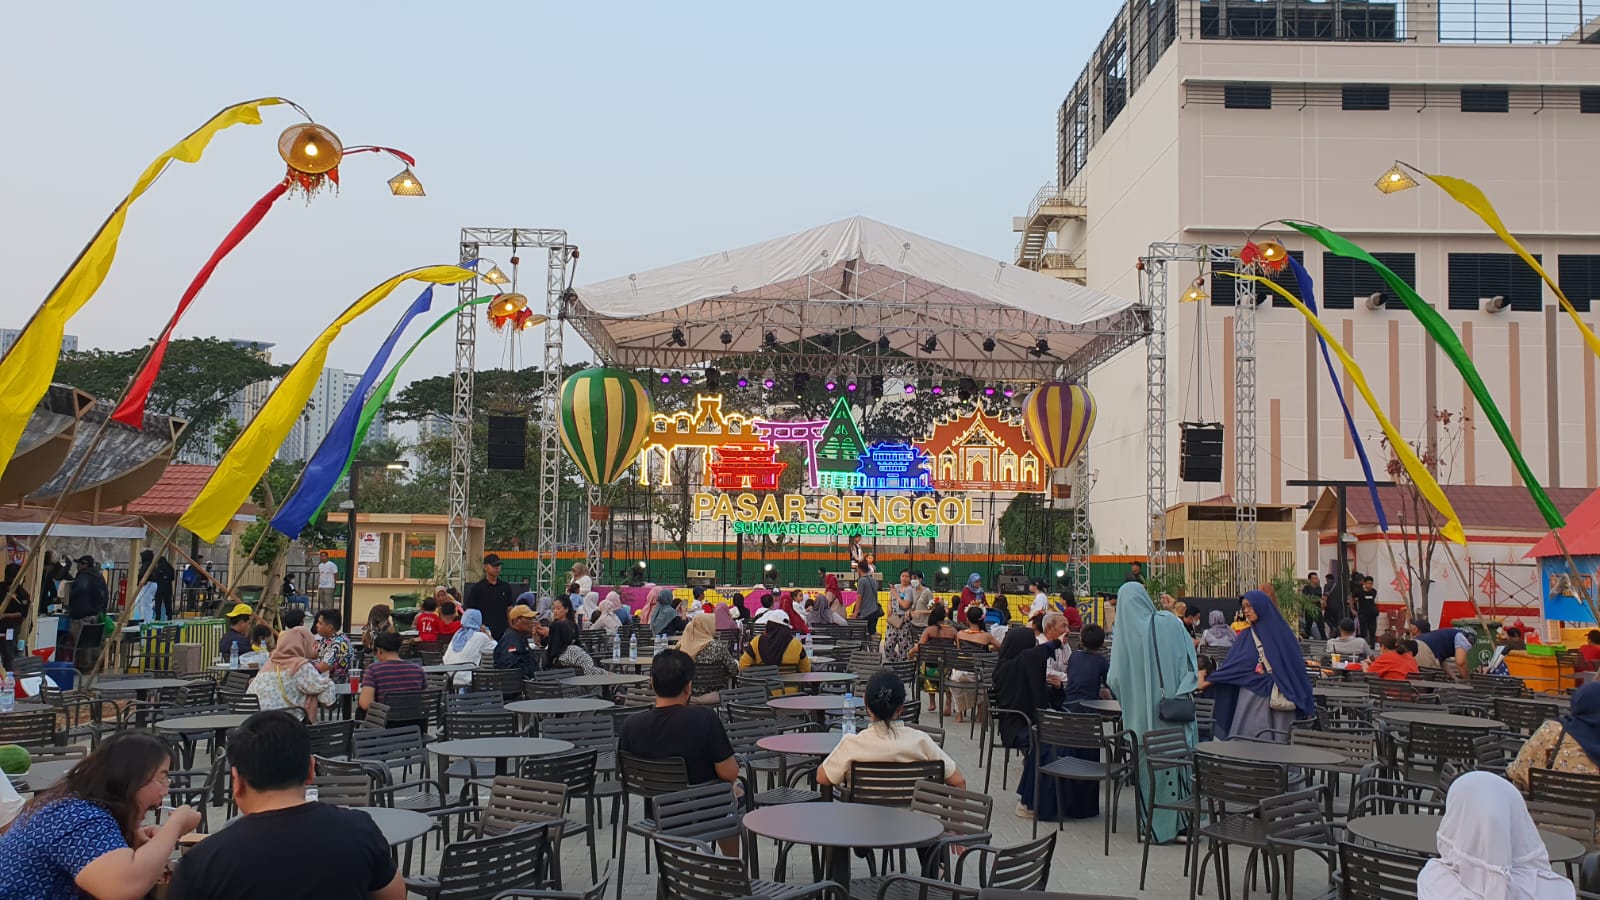 Festival Kuliner Pasar Senggol Summarecon Mall Bekasi, Rekomendasi  Tempat Seru di Akhir Pekan